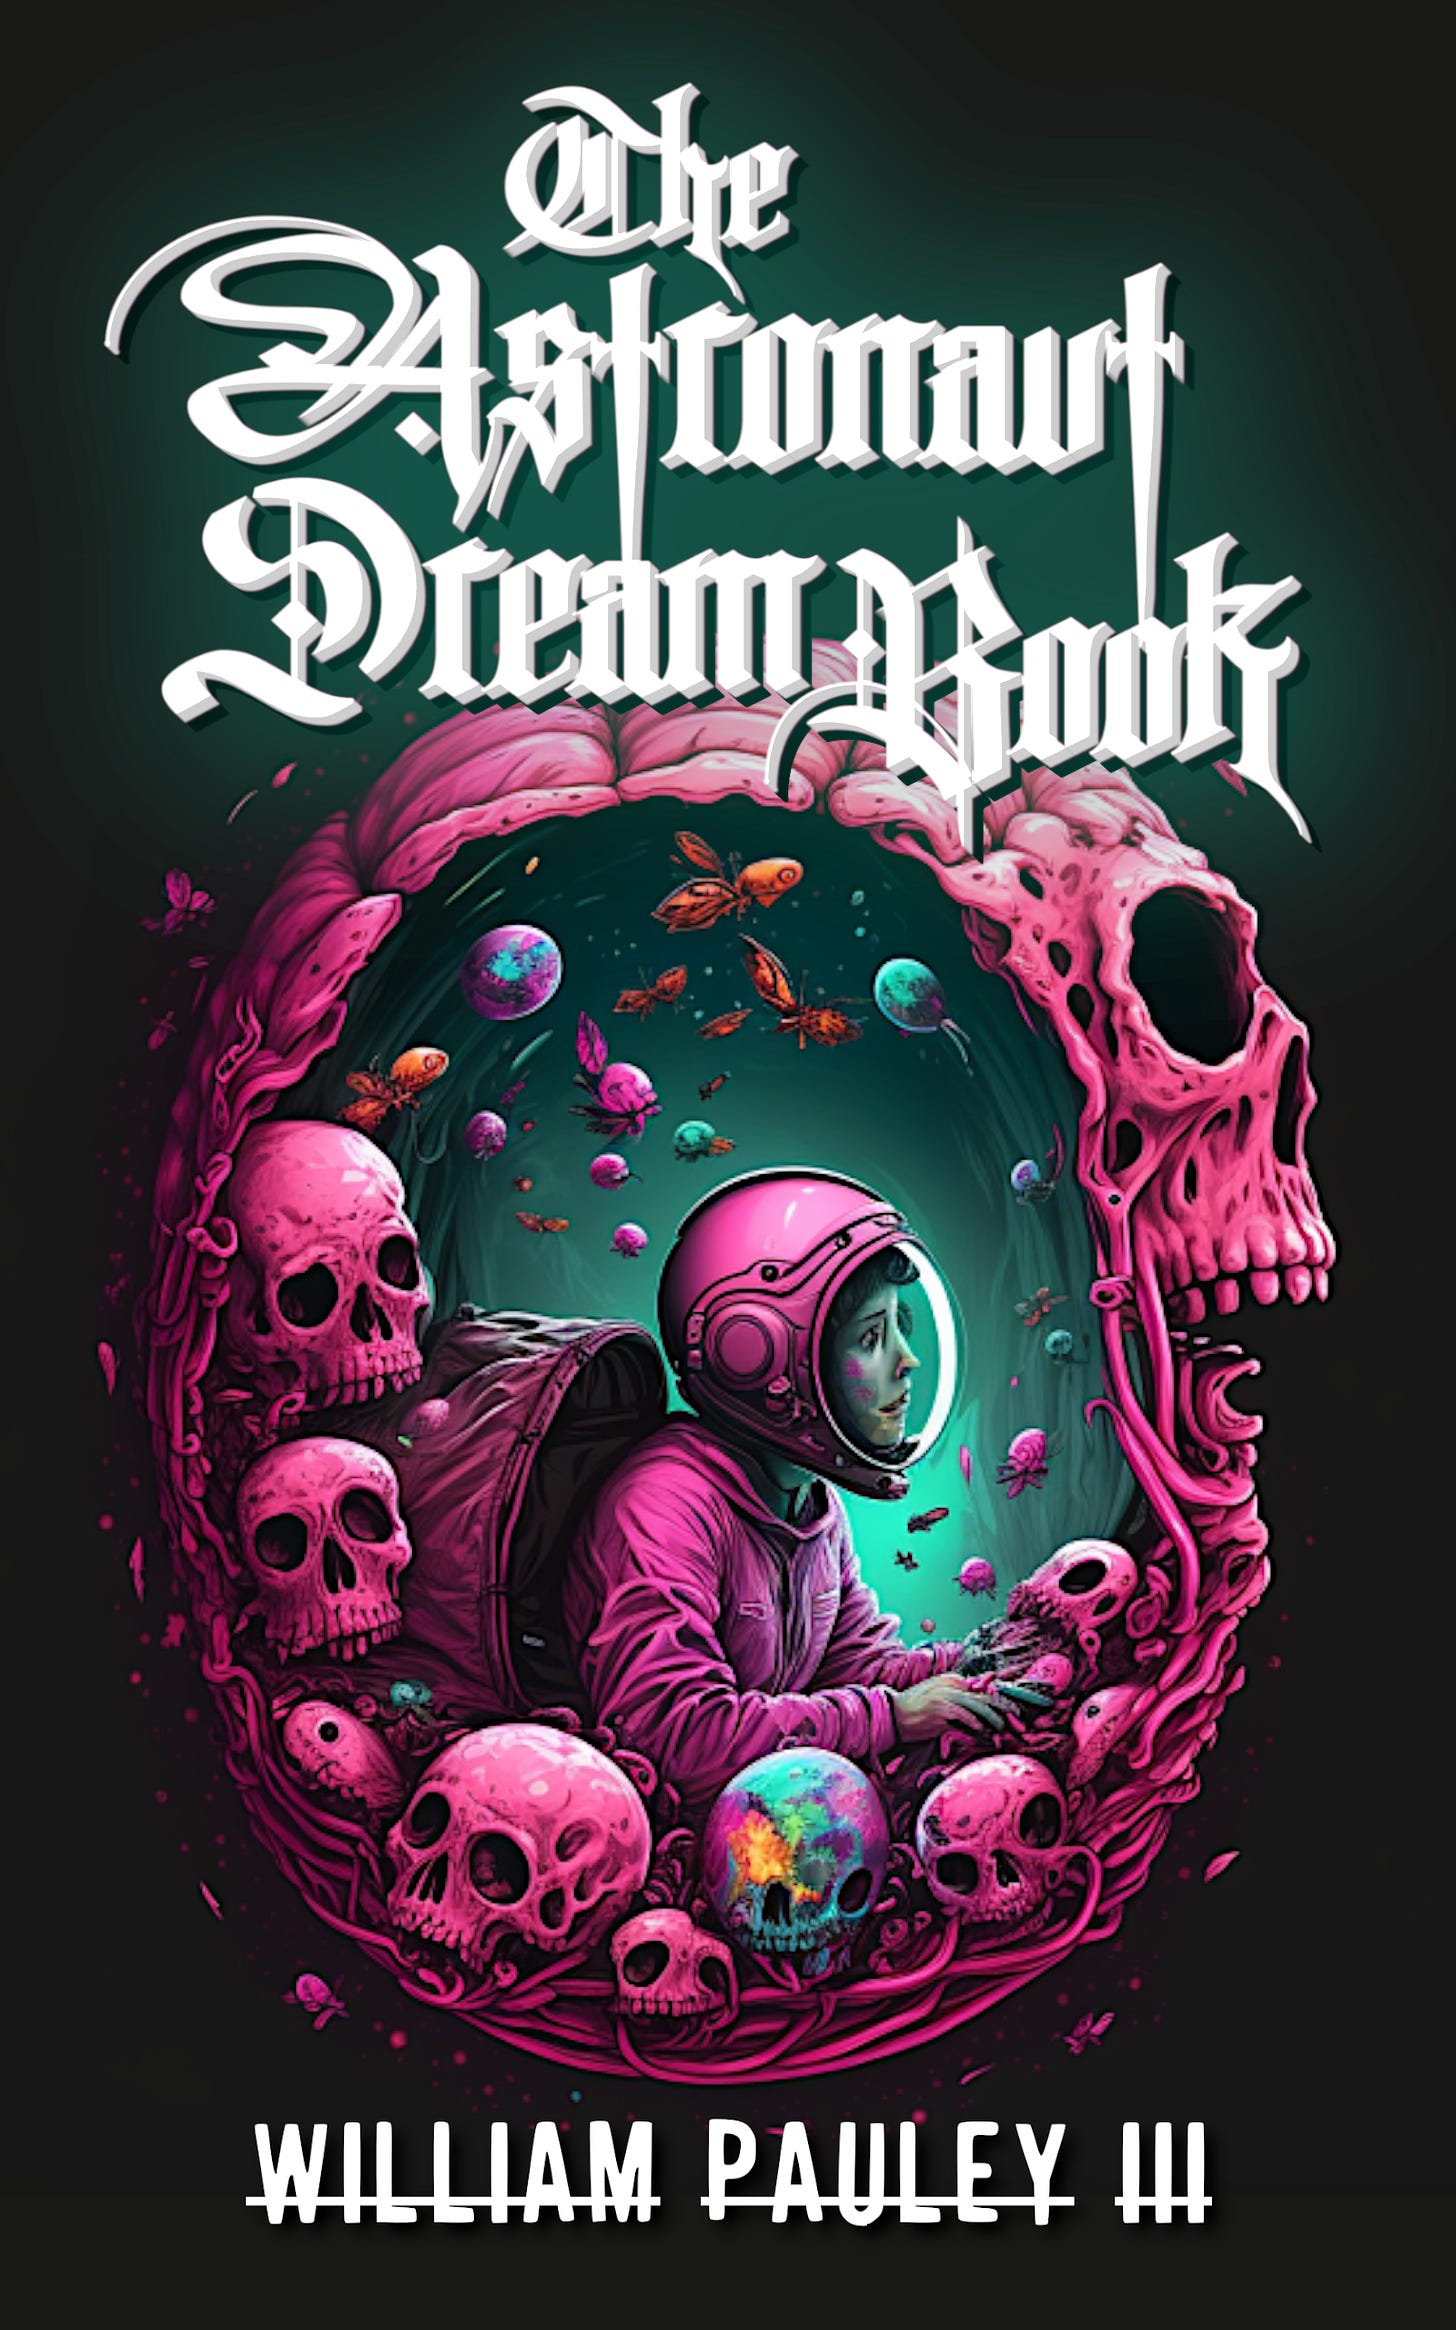 The Astronaut Dream Book book cover